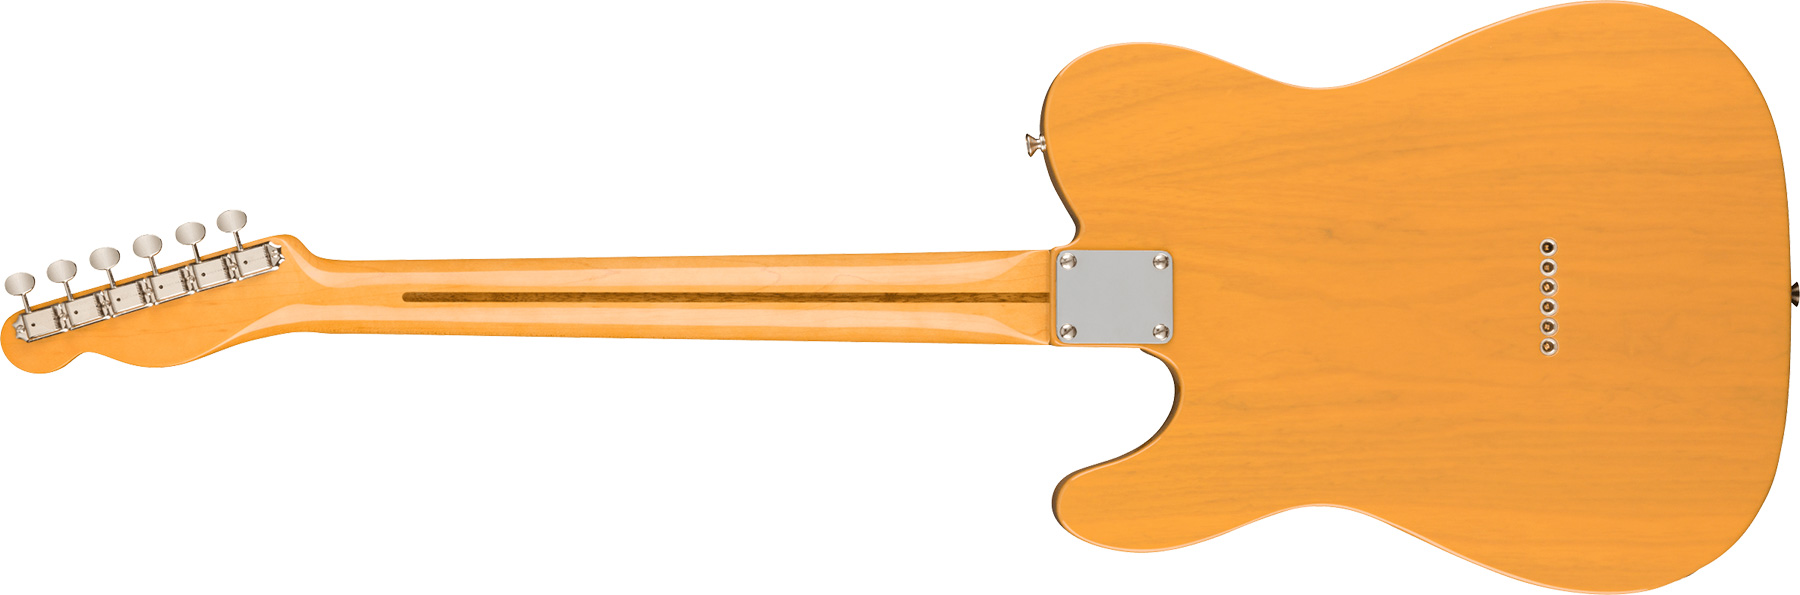 Fender Tele 1951 American Vintage Ii Usa 2s Ht Mn - Butterscotch Blonde - Televorm elektrische gitaar - Variation 1